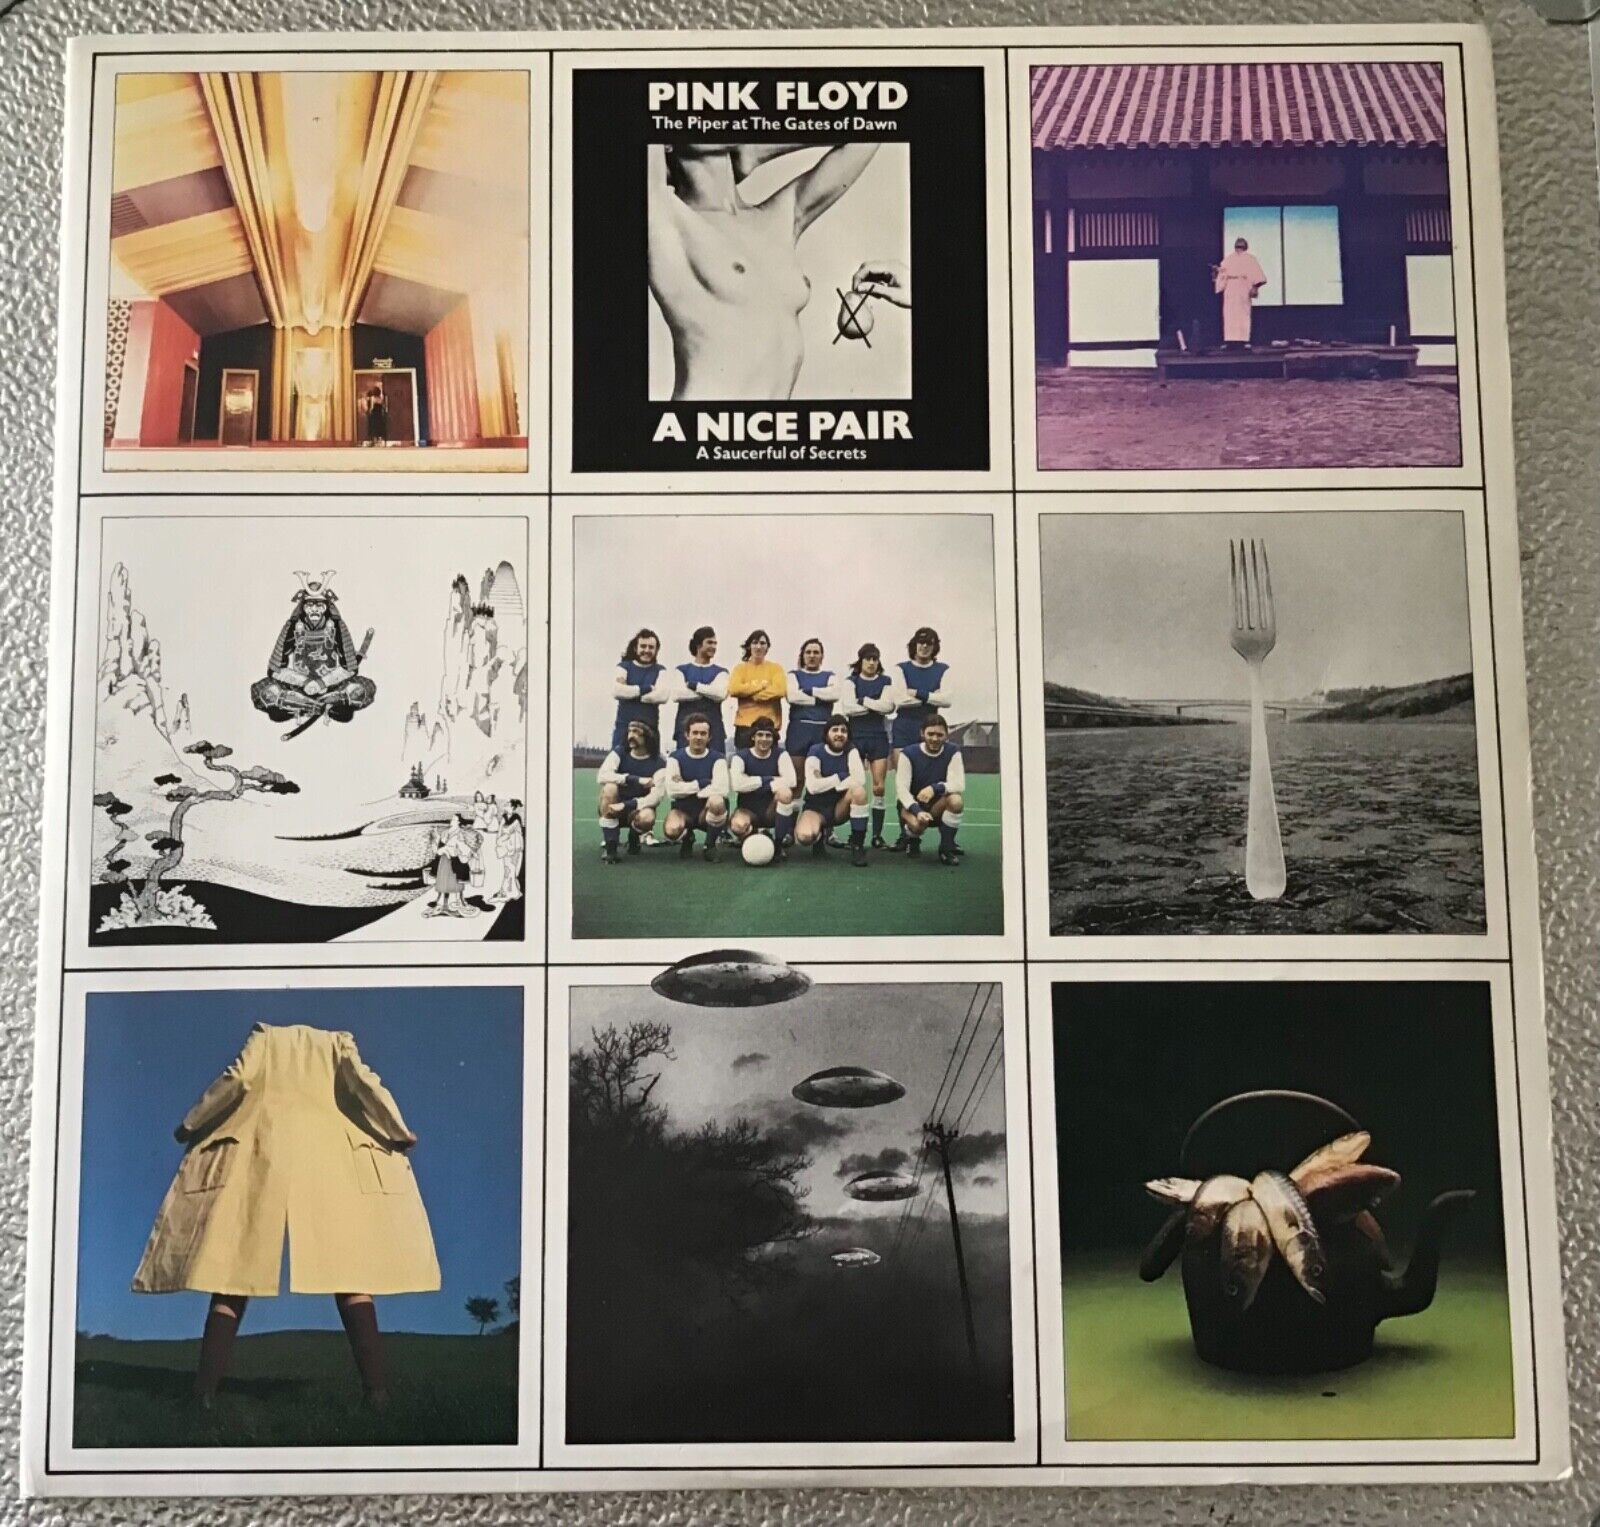 PINK FLOYD,A NICE PAIR,VINTAGE 1969 DOUBLE GATEFOLD ALBUM,EX/EX,NM